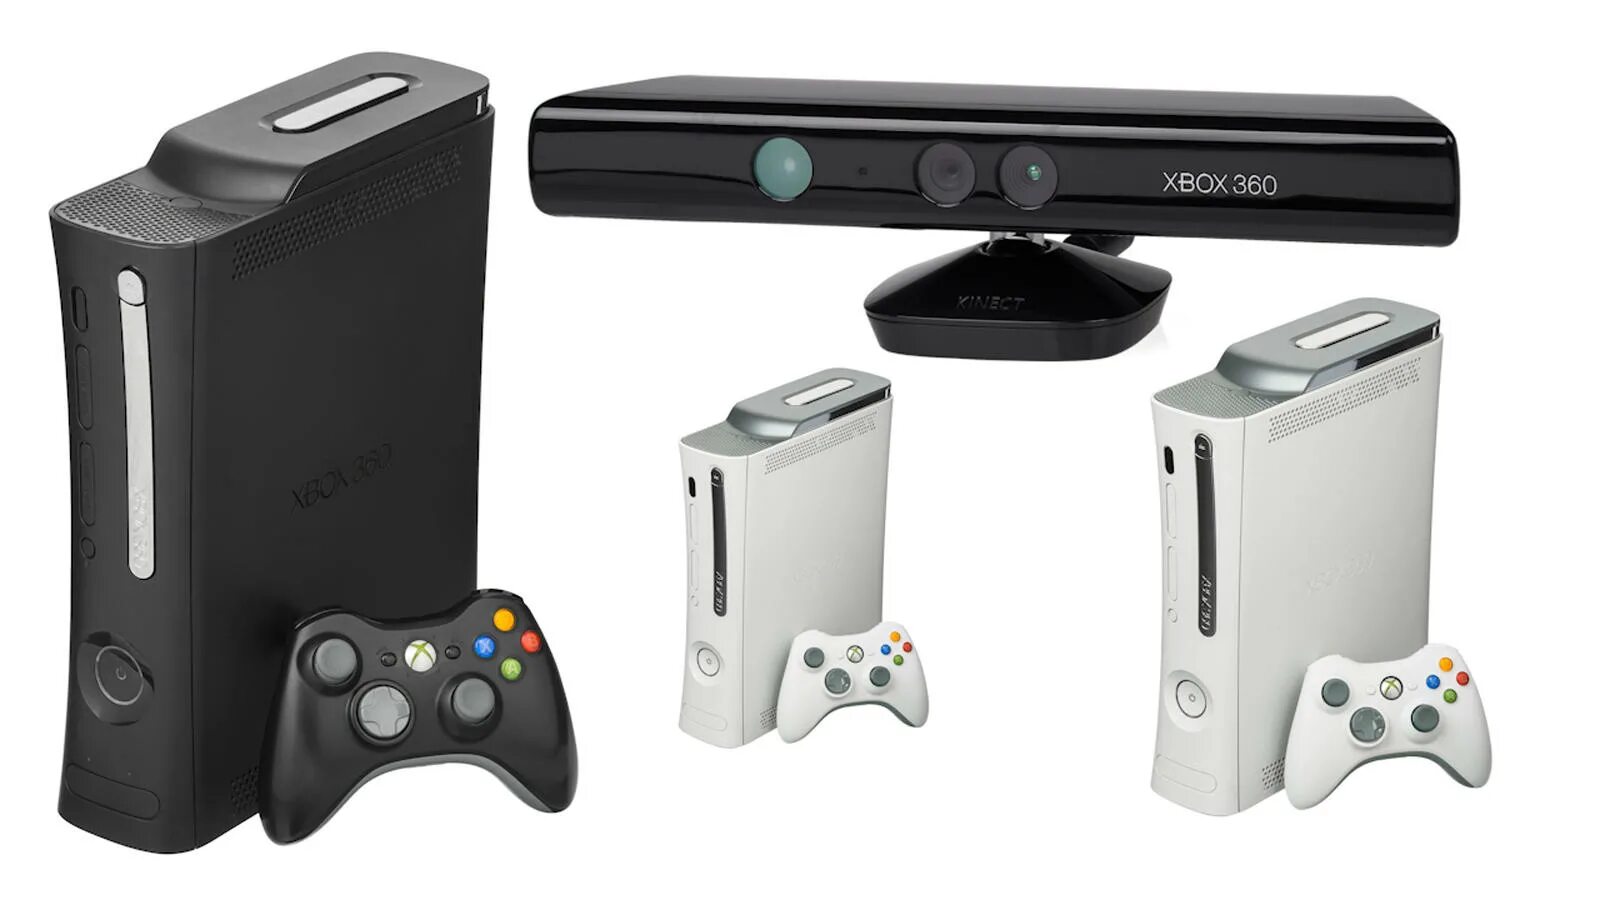 Xbox 360 2005. Xbox Xbox 360. Xbox 360 консоль. Xbox 360 2005 фат. Xbox 360 купить авито